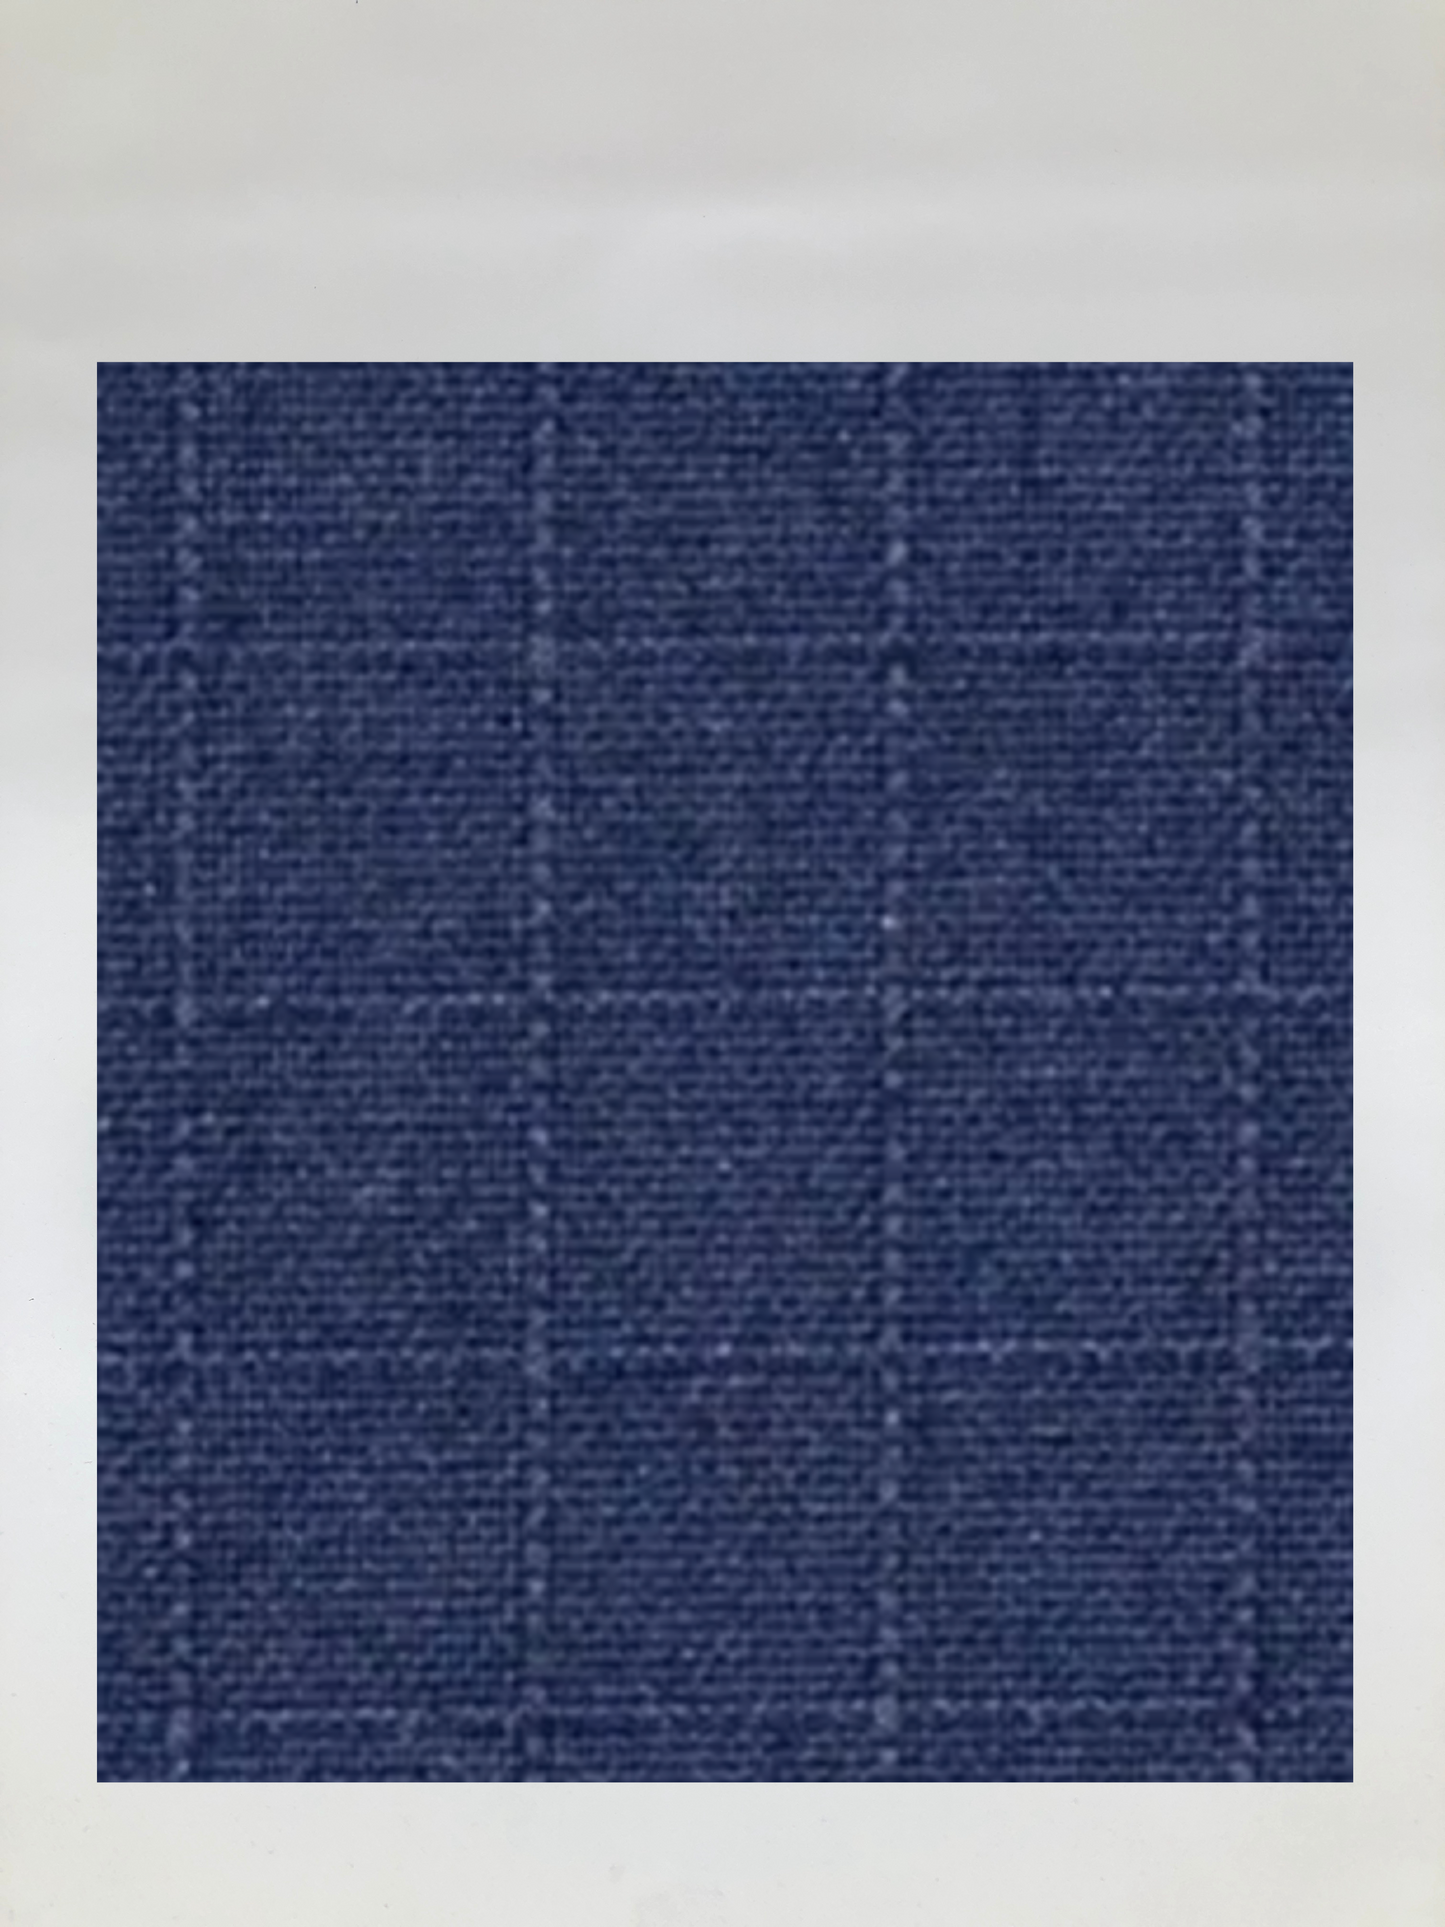 Fabric, Halley Stevensons' Waxed Organic Cotton, Dark Navy